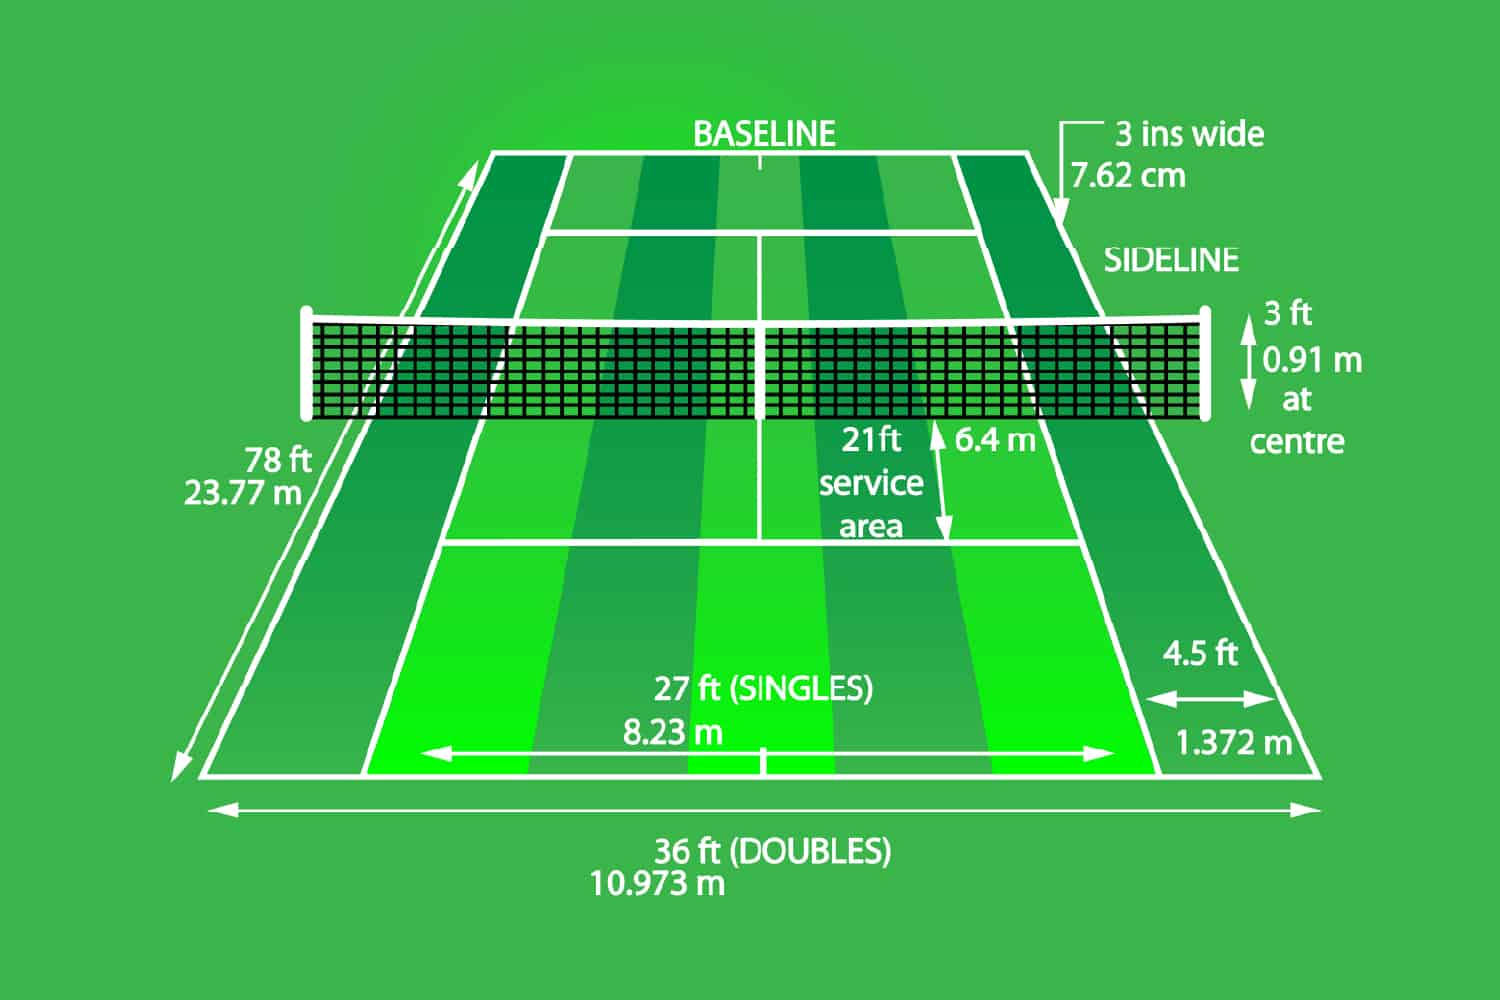 Tennis Court Dimensions Diagram